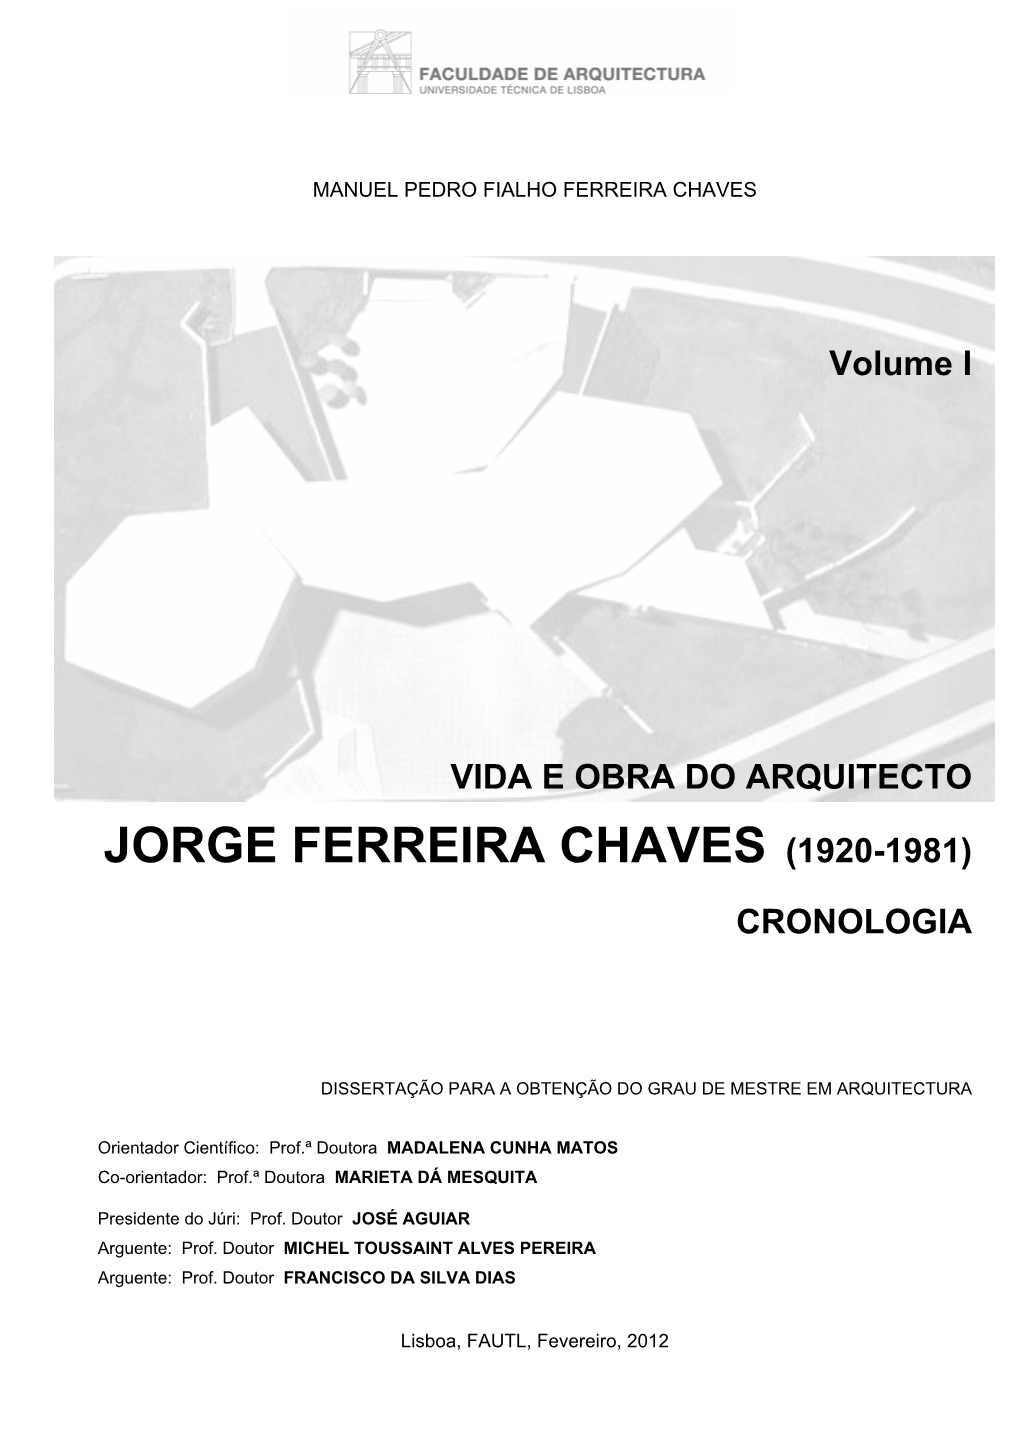 Jorge Ferreira Chaves (1920-1981) Cronologia